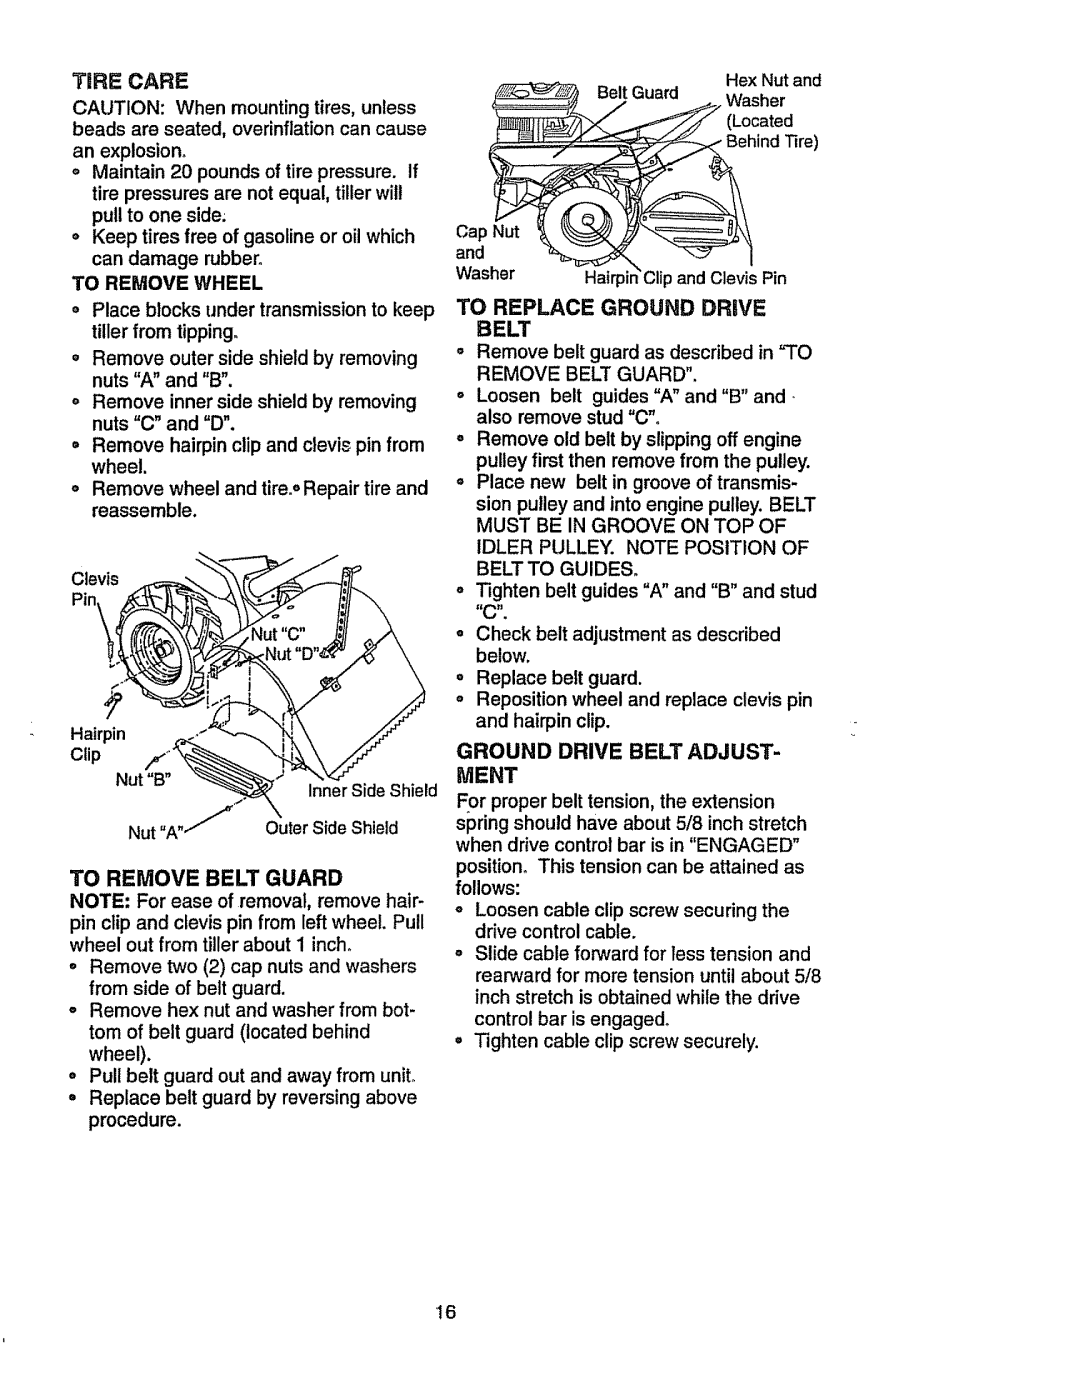 Craftsman 917.2933 owner manual TiRE CARE 